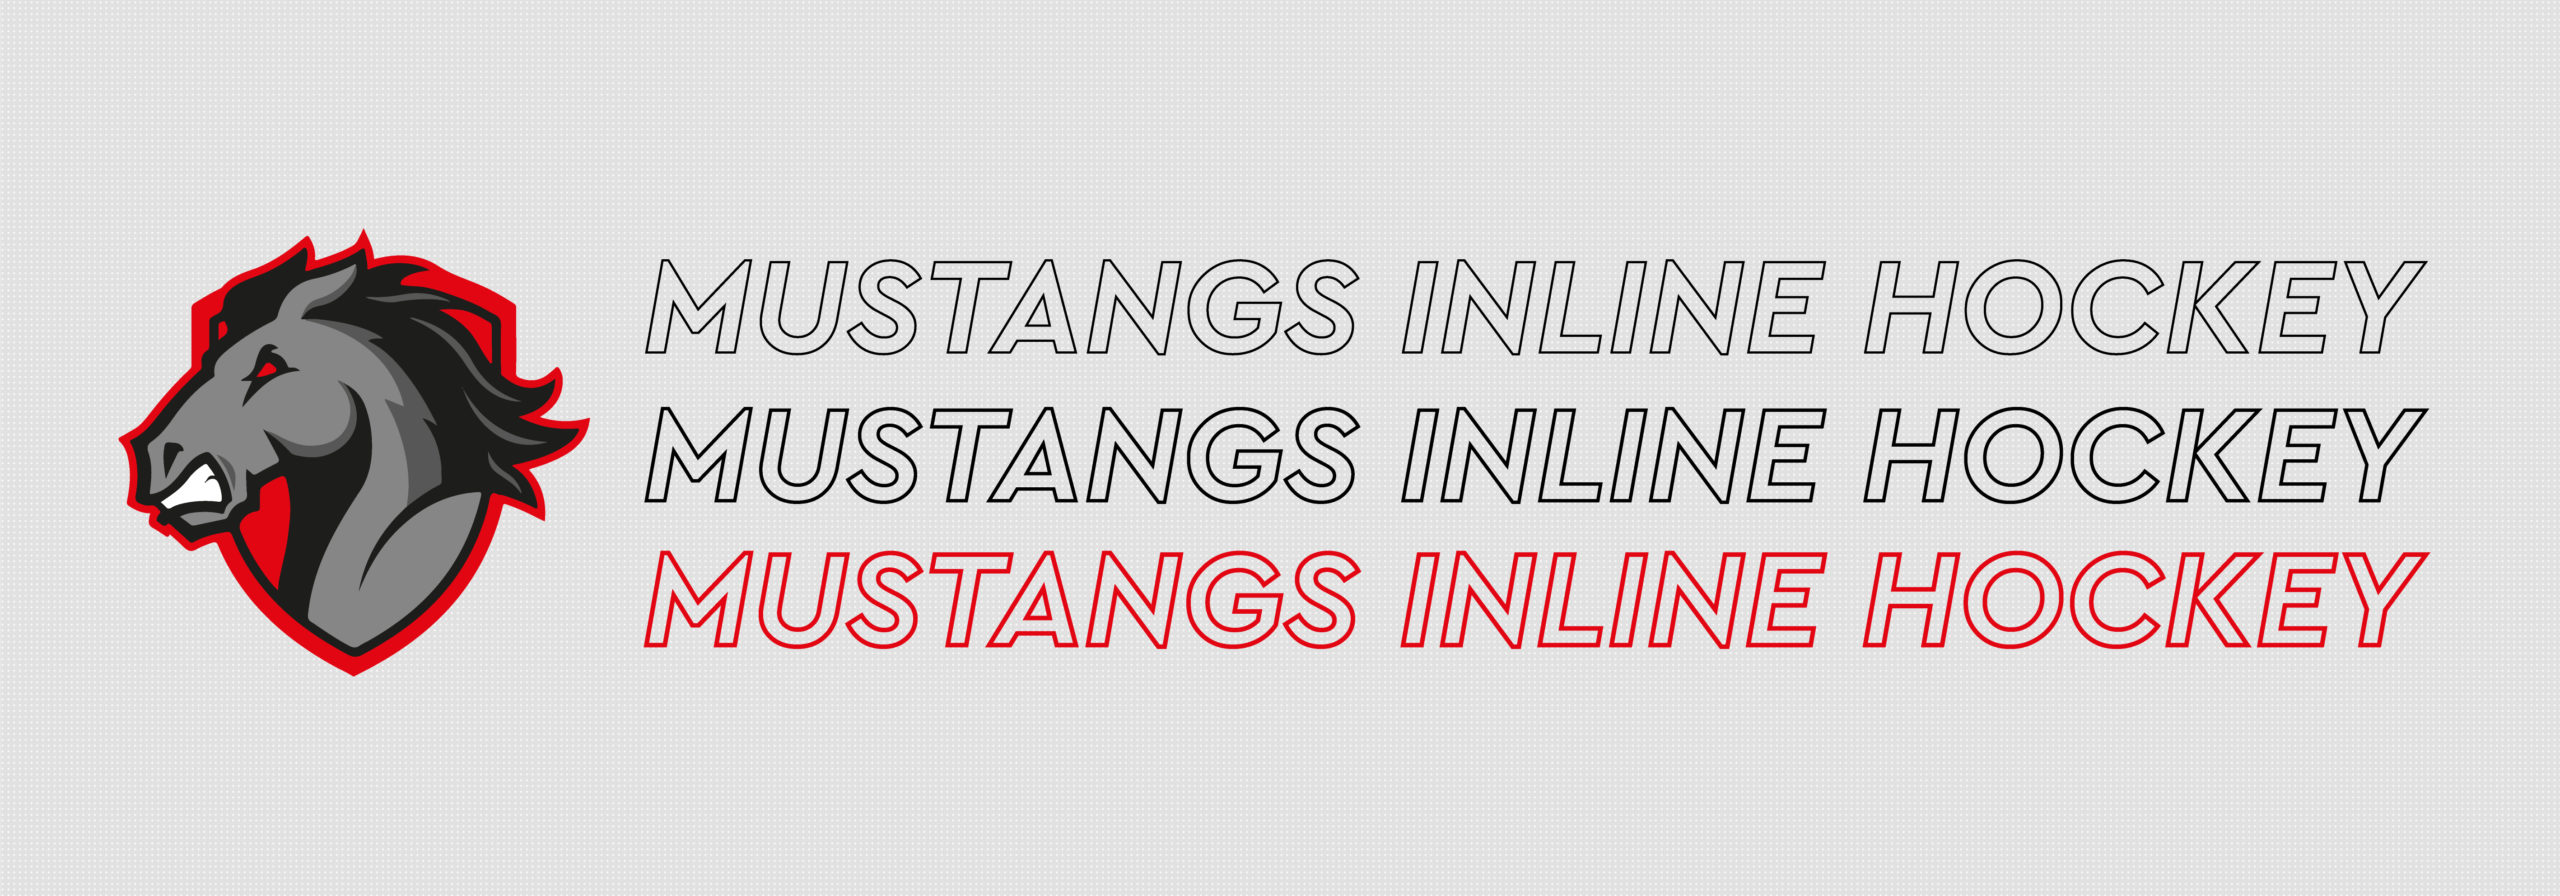 Mustangs Inline Hockey Shorts